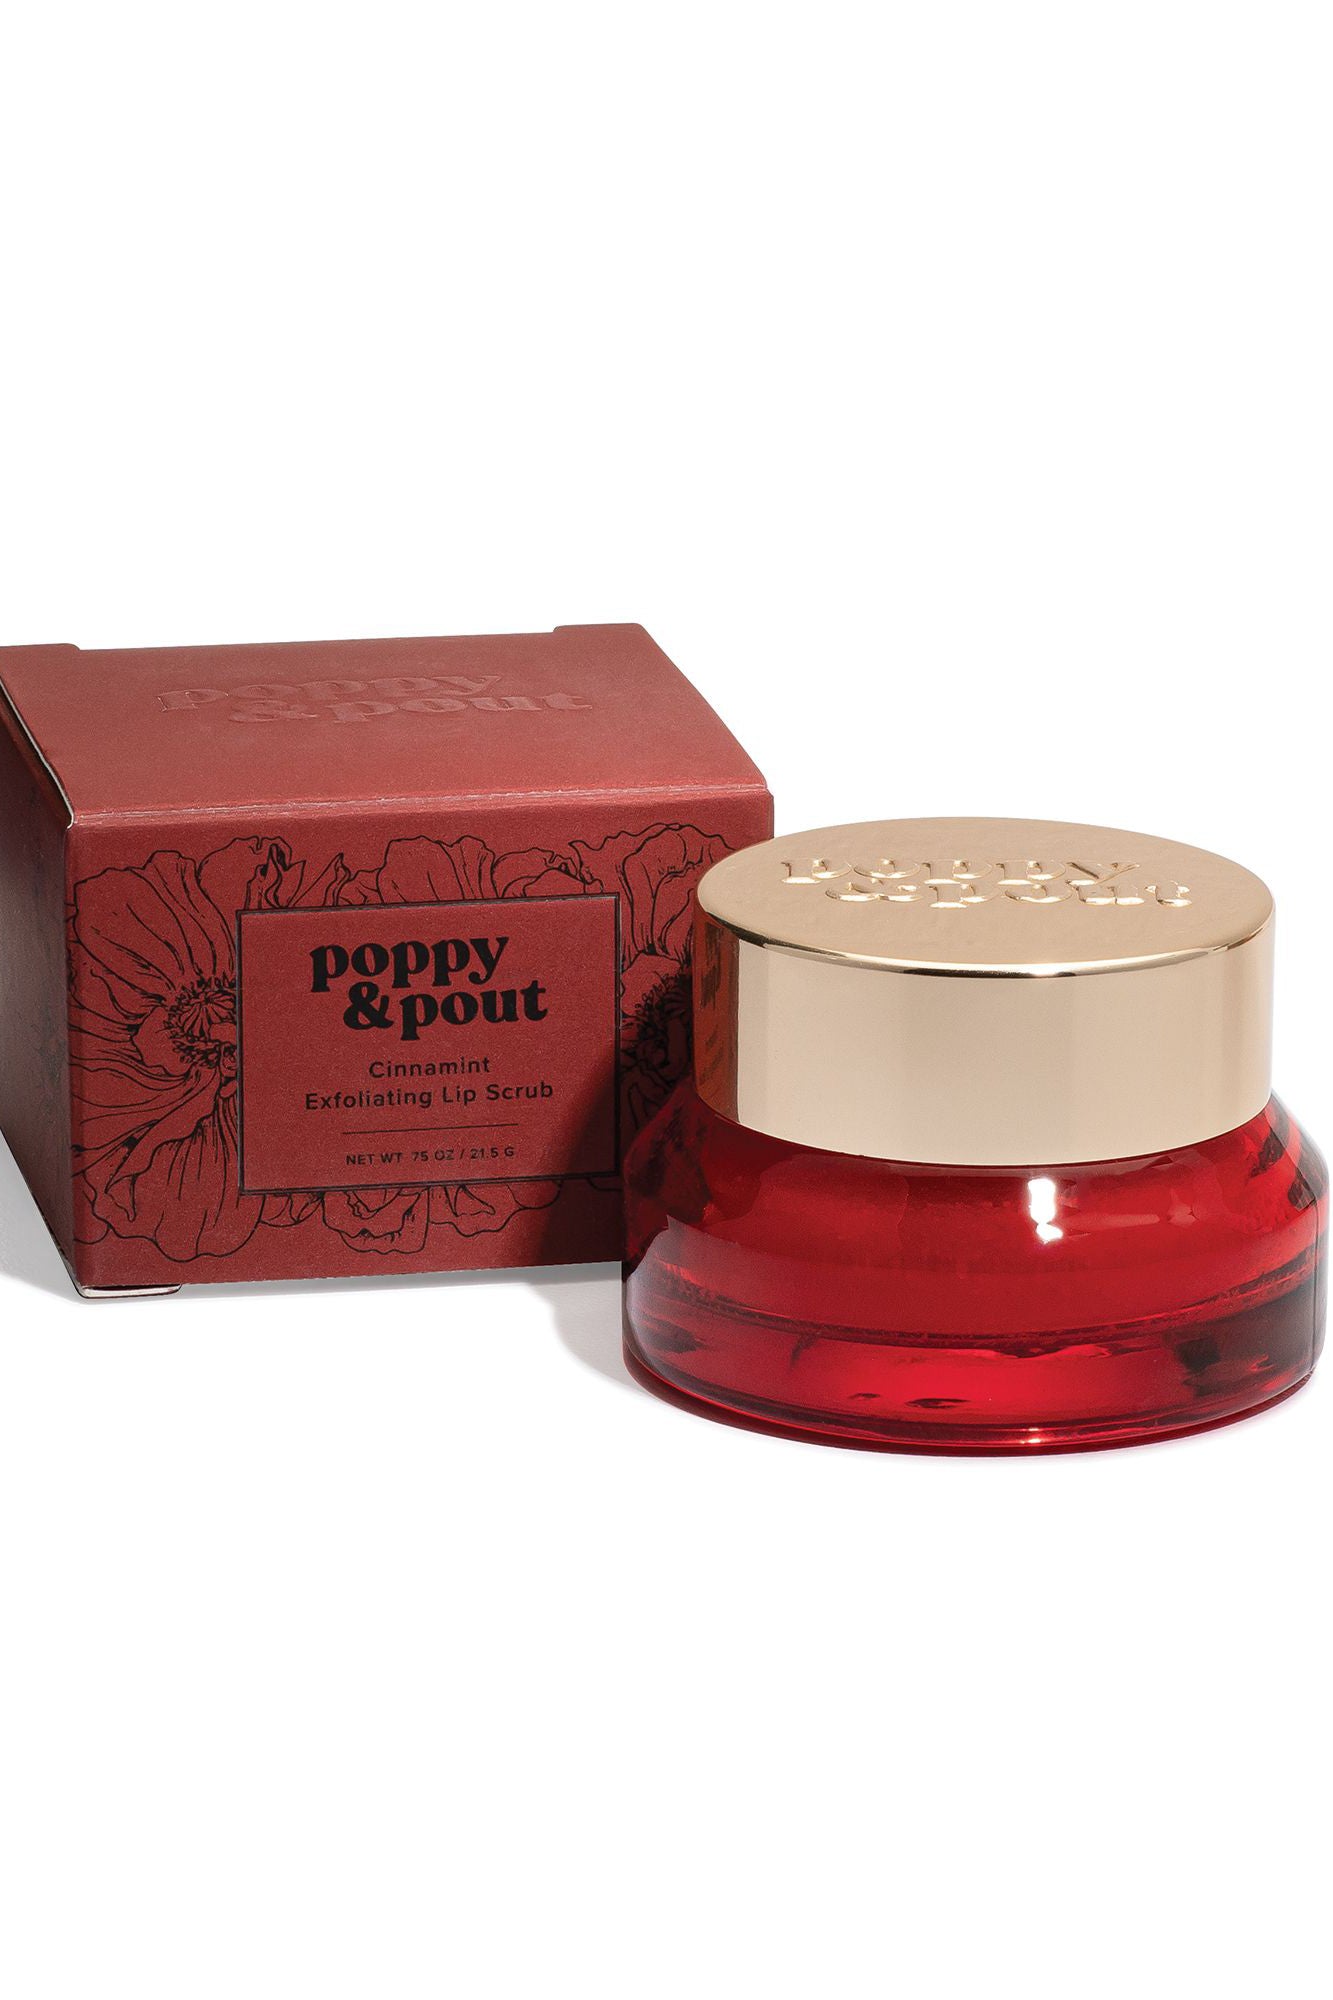 Poppy & Pout Lip Scrub / Cinnamint